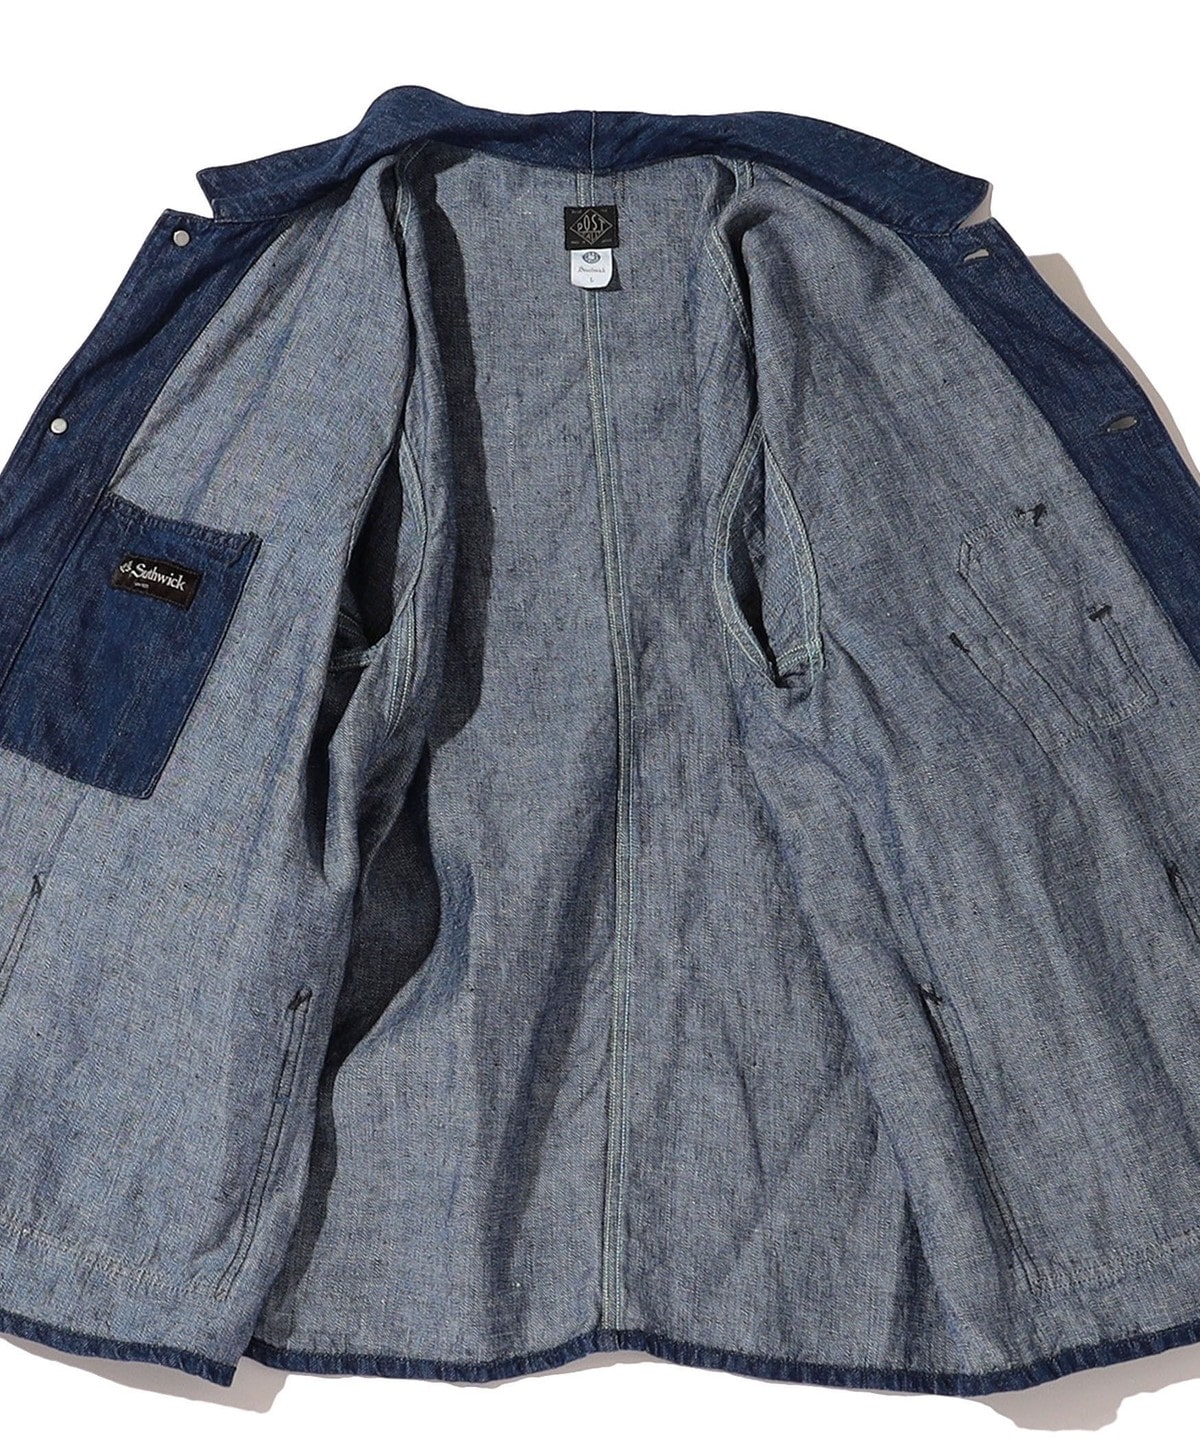 Southwick別注】Post O'Alls: #1106 3 Poket Jacket / Linen Indigo